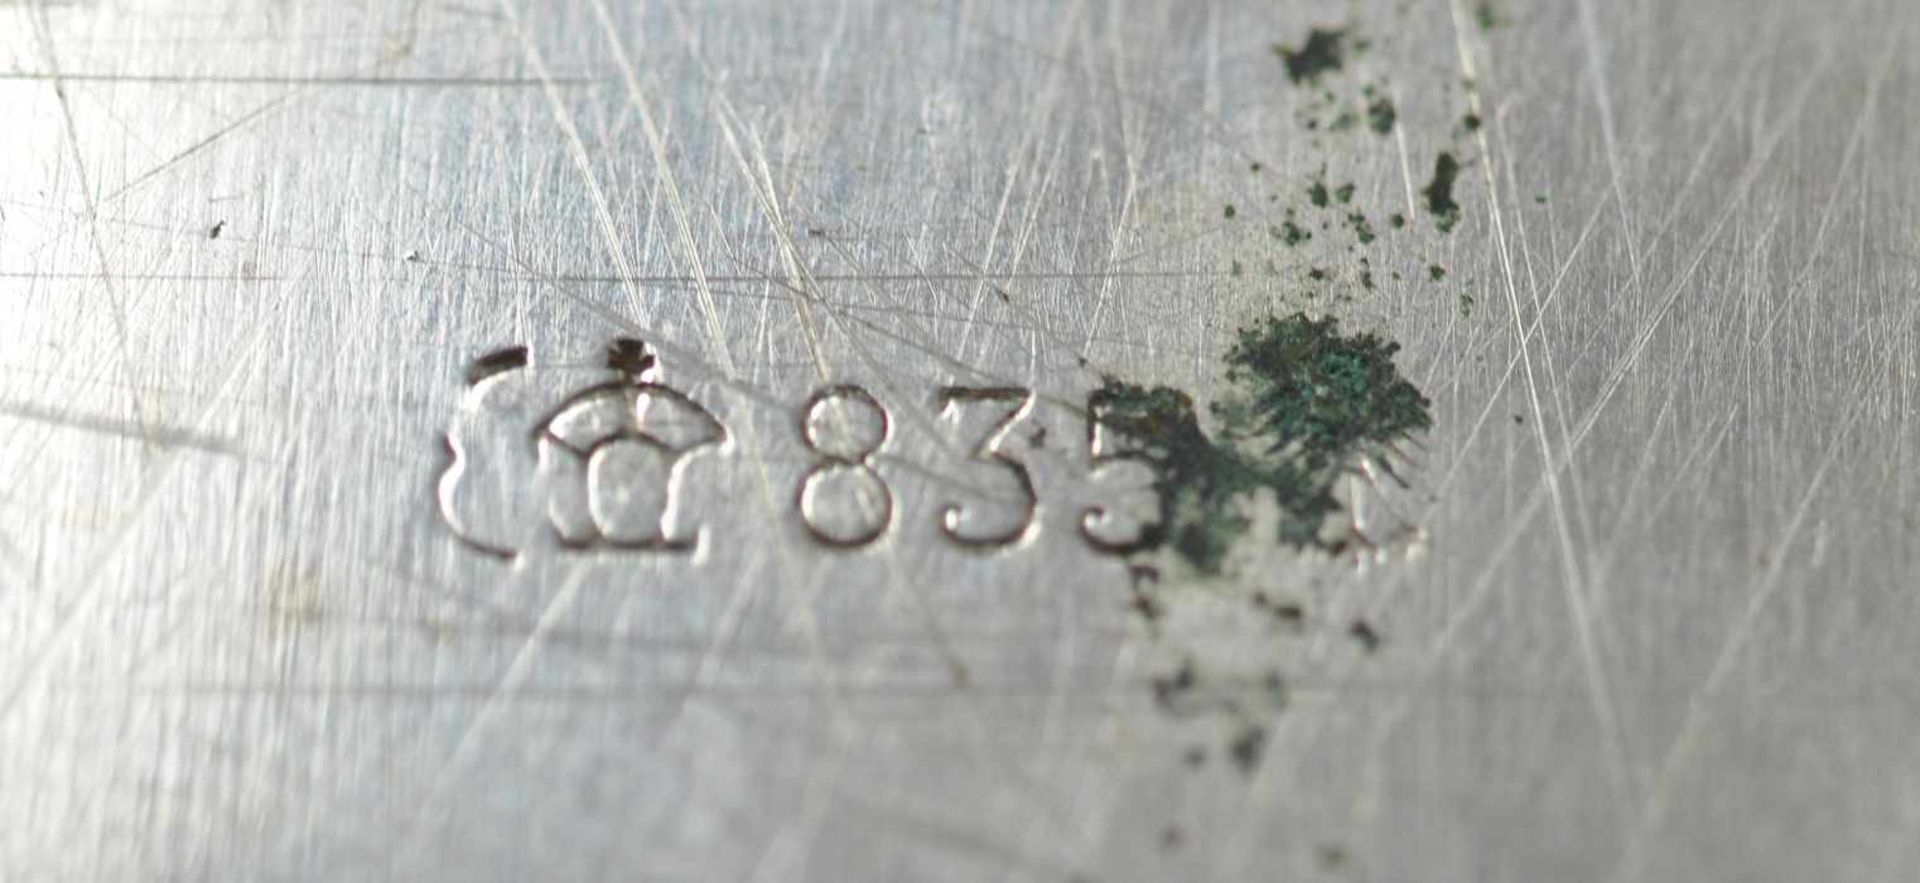 TABLETT oval, passig geschwungen mit leicht getrepptem Rand, Silber 835, 720gr, 42x32cm - Image 2 of 2